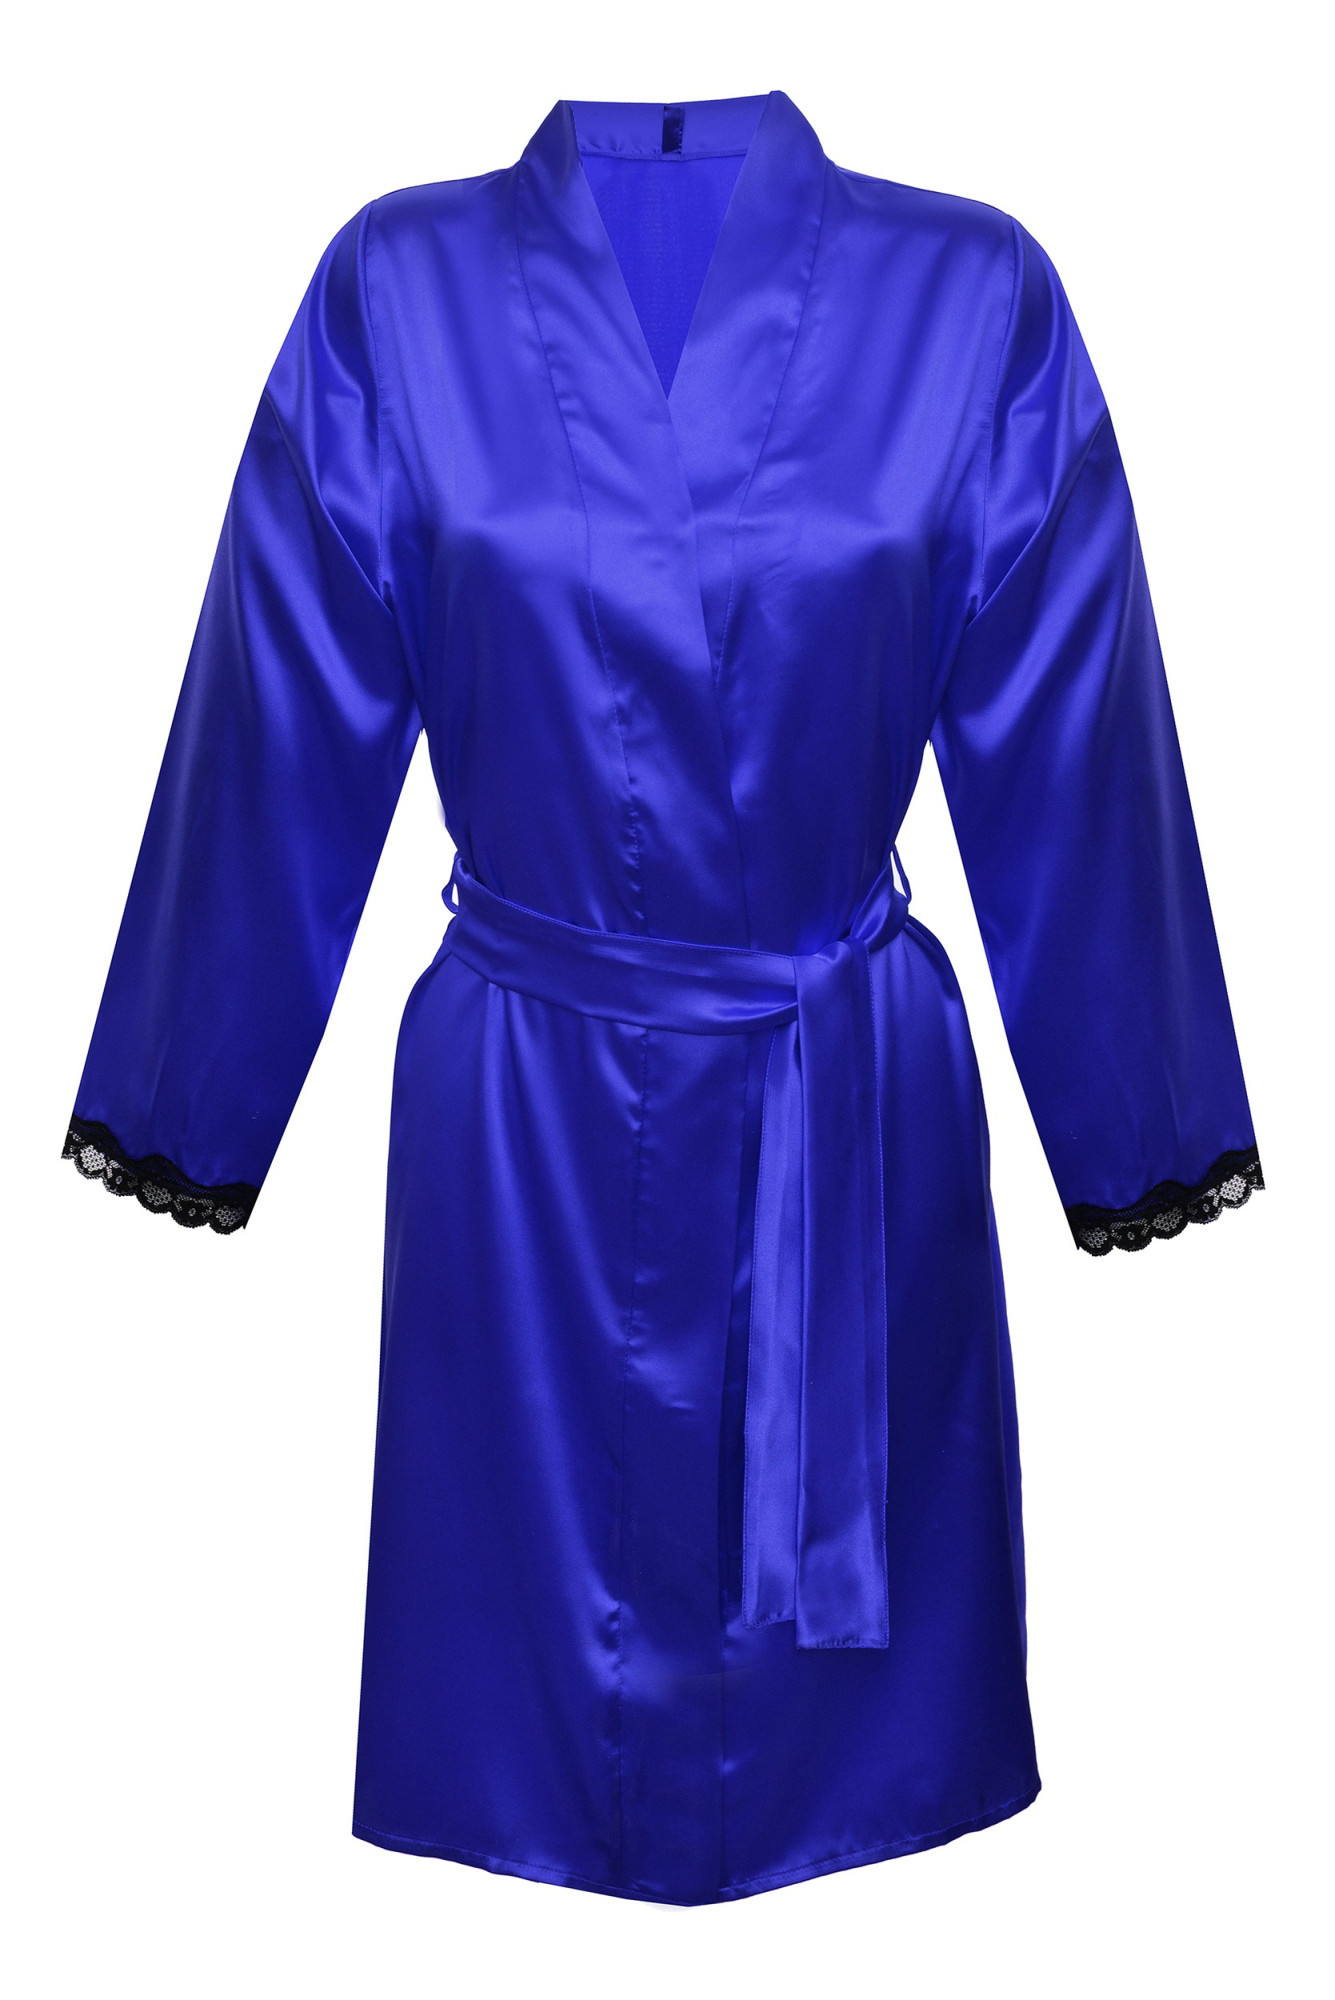 DKaren Housecoat Nancy Blue 2XL Modrá